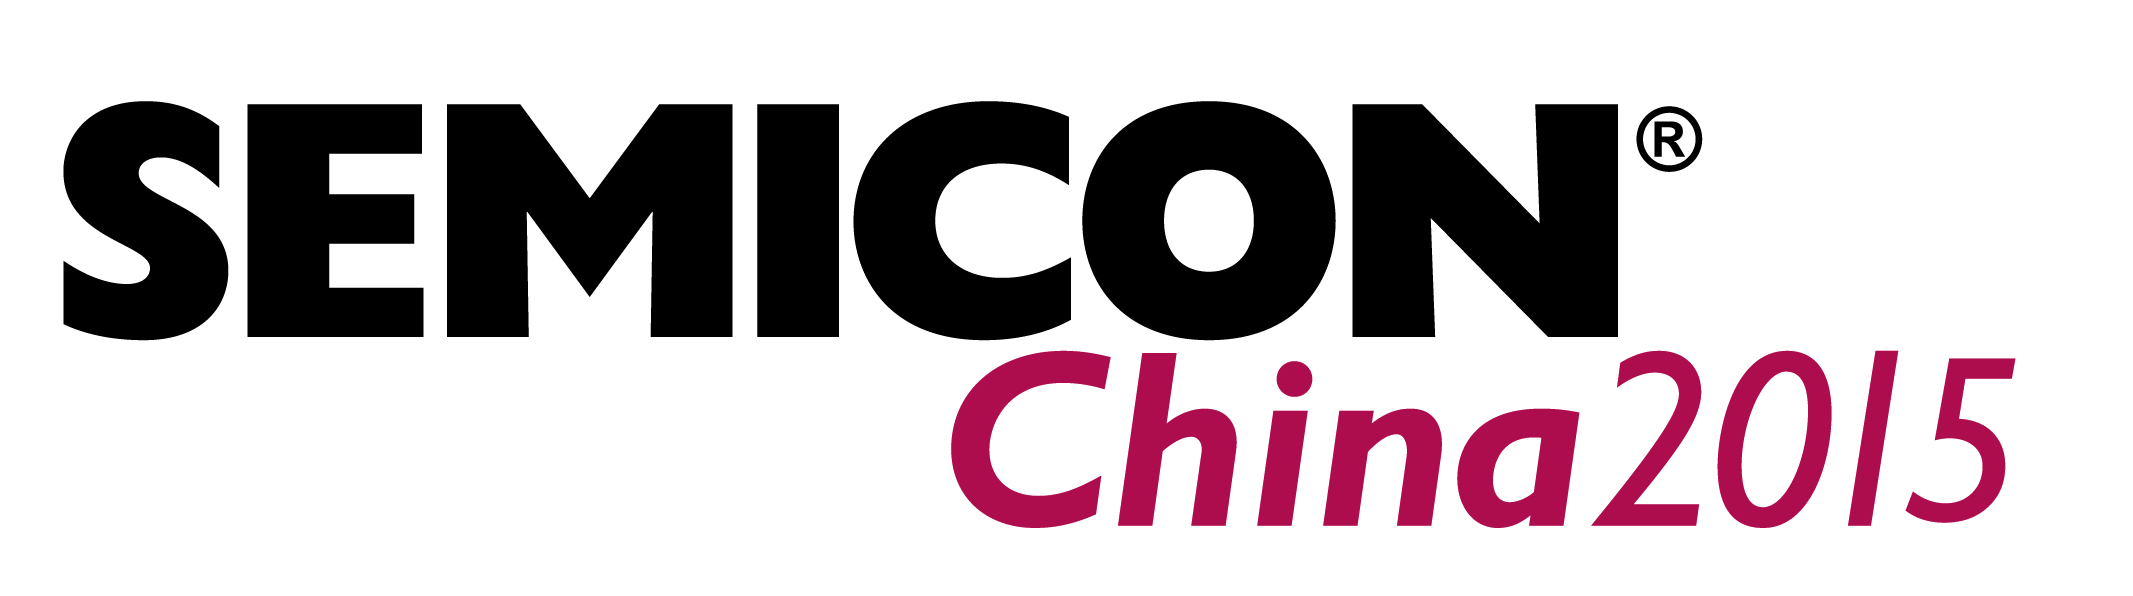 SEMICON China 2015